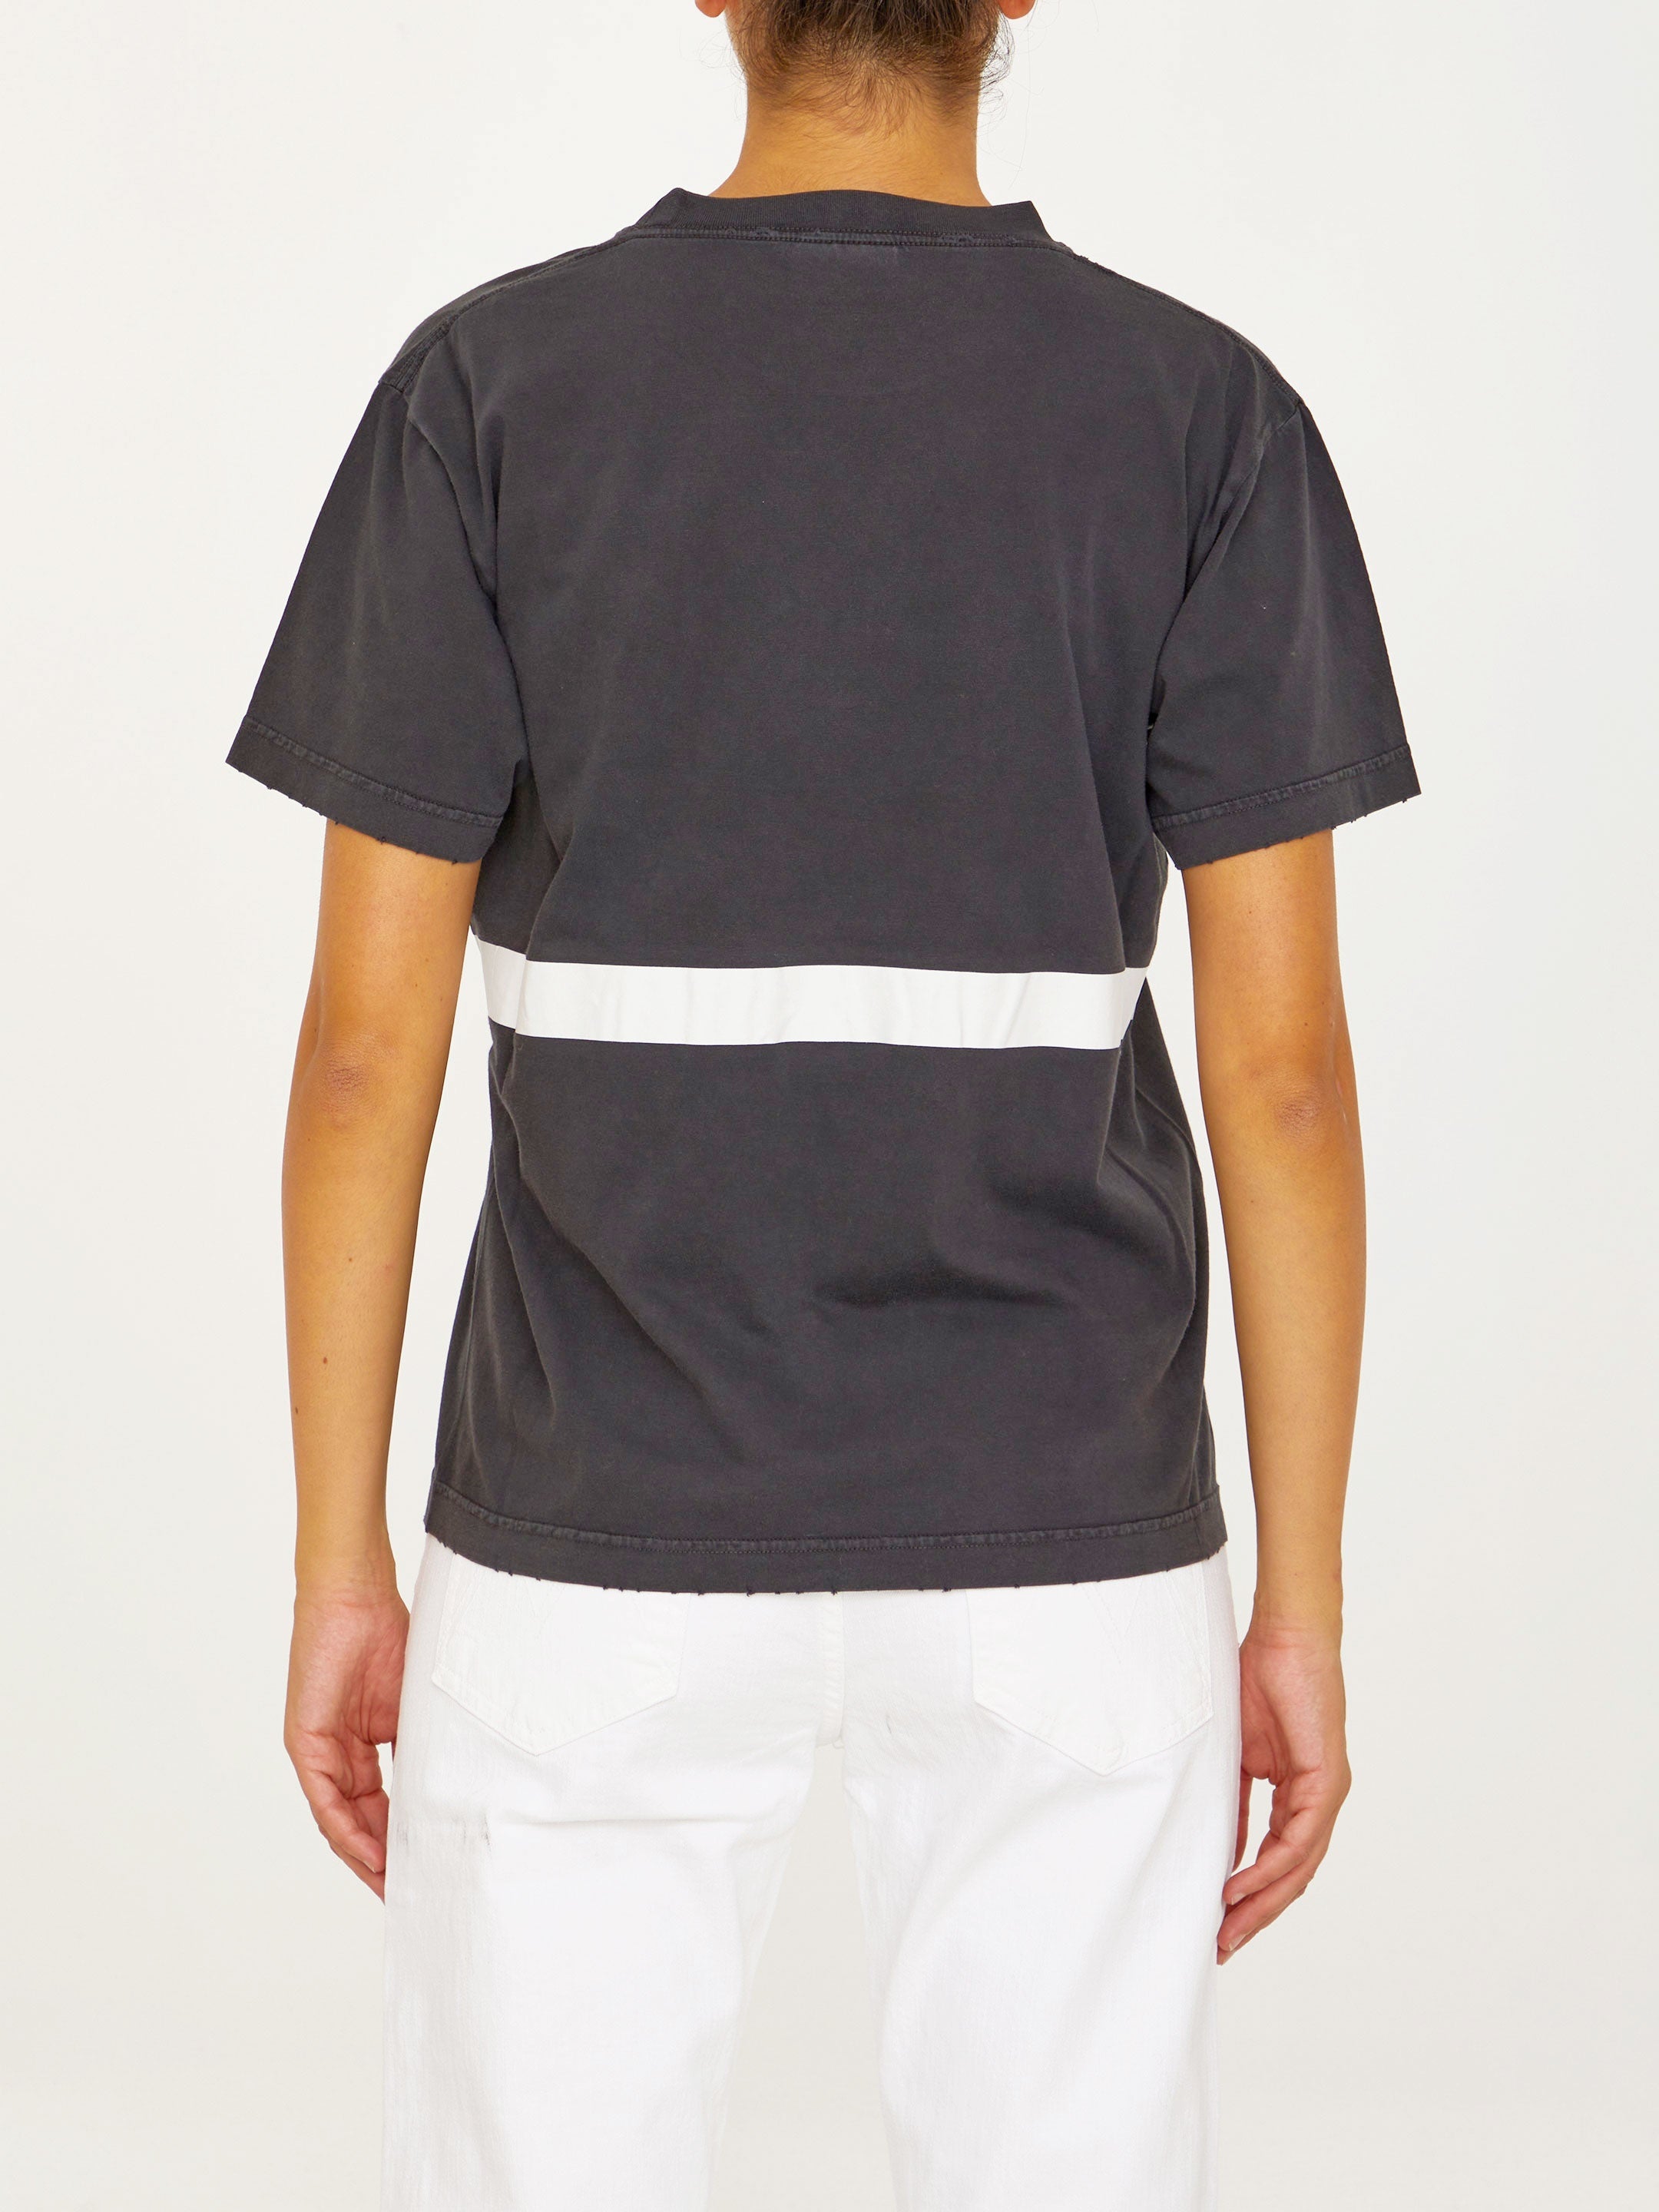 BALENCIAGA-OUTLET-SALE-360deg-t-shirt-Shirts-ARCHIVE-COLLECTION-4.jpg